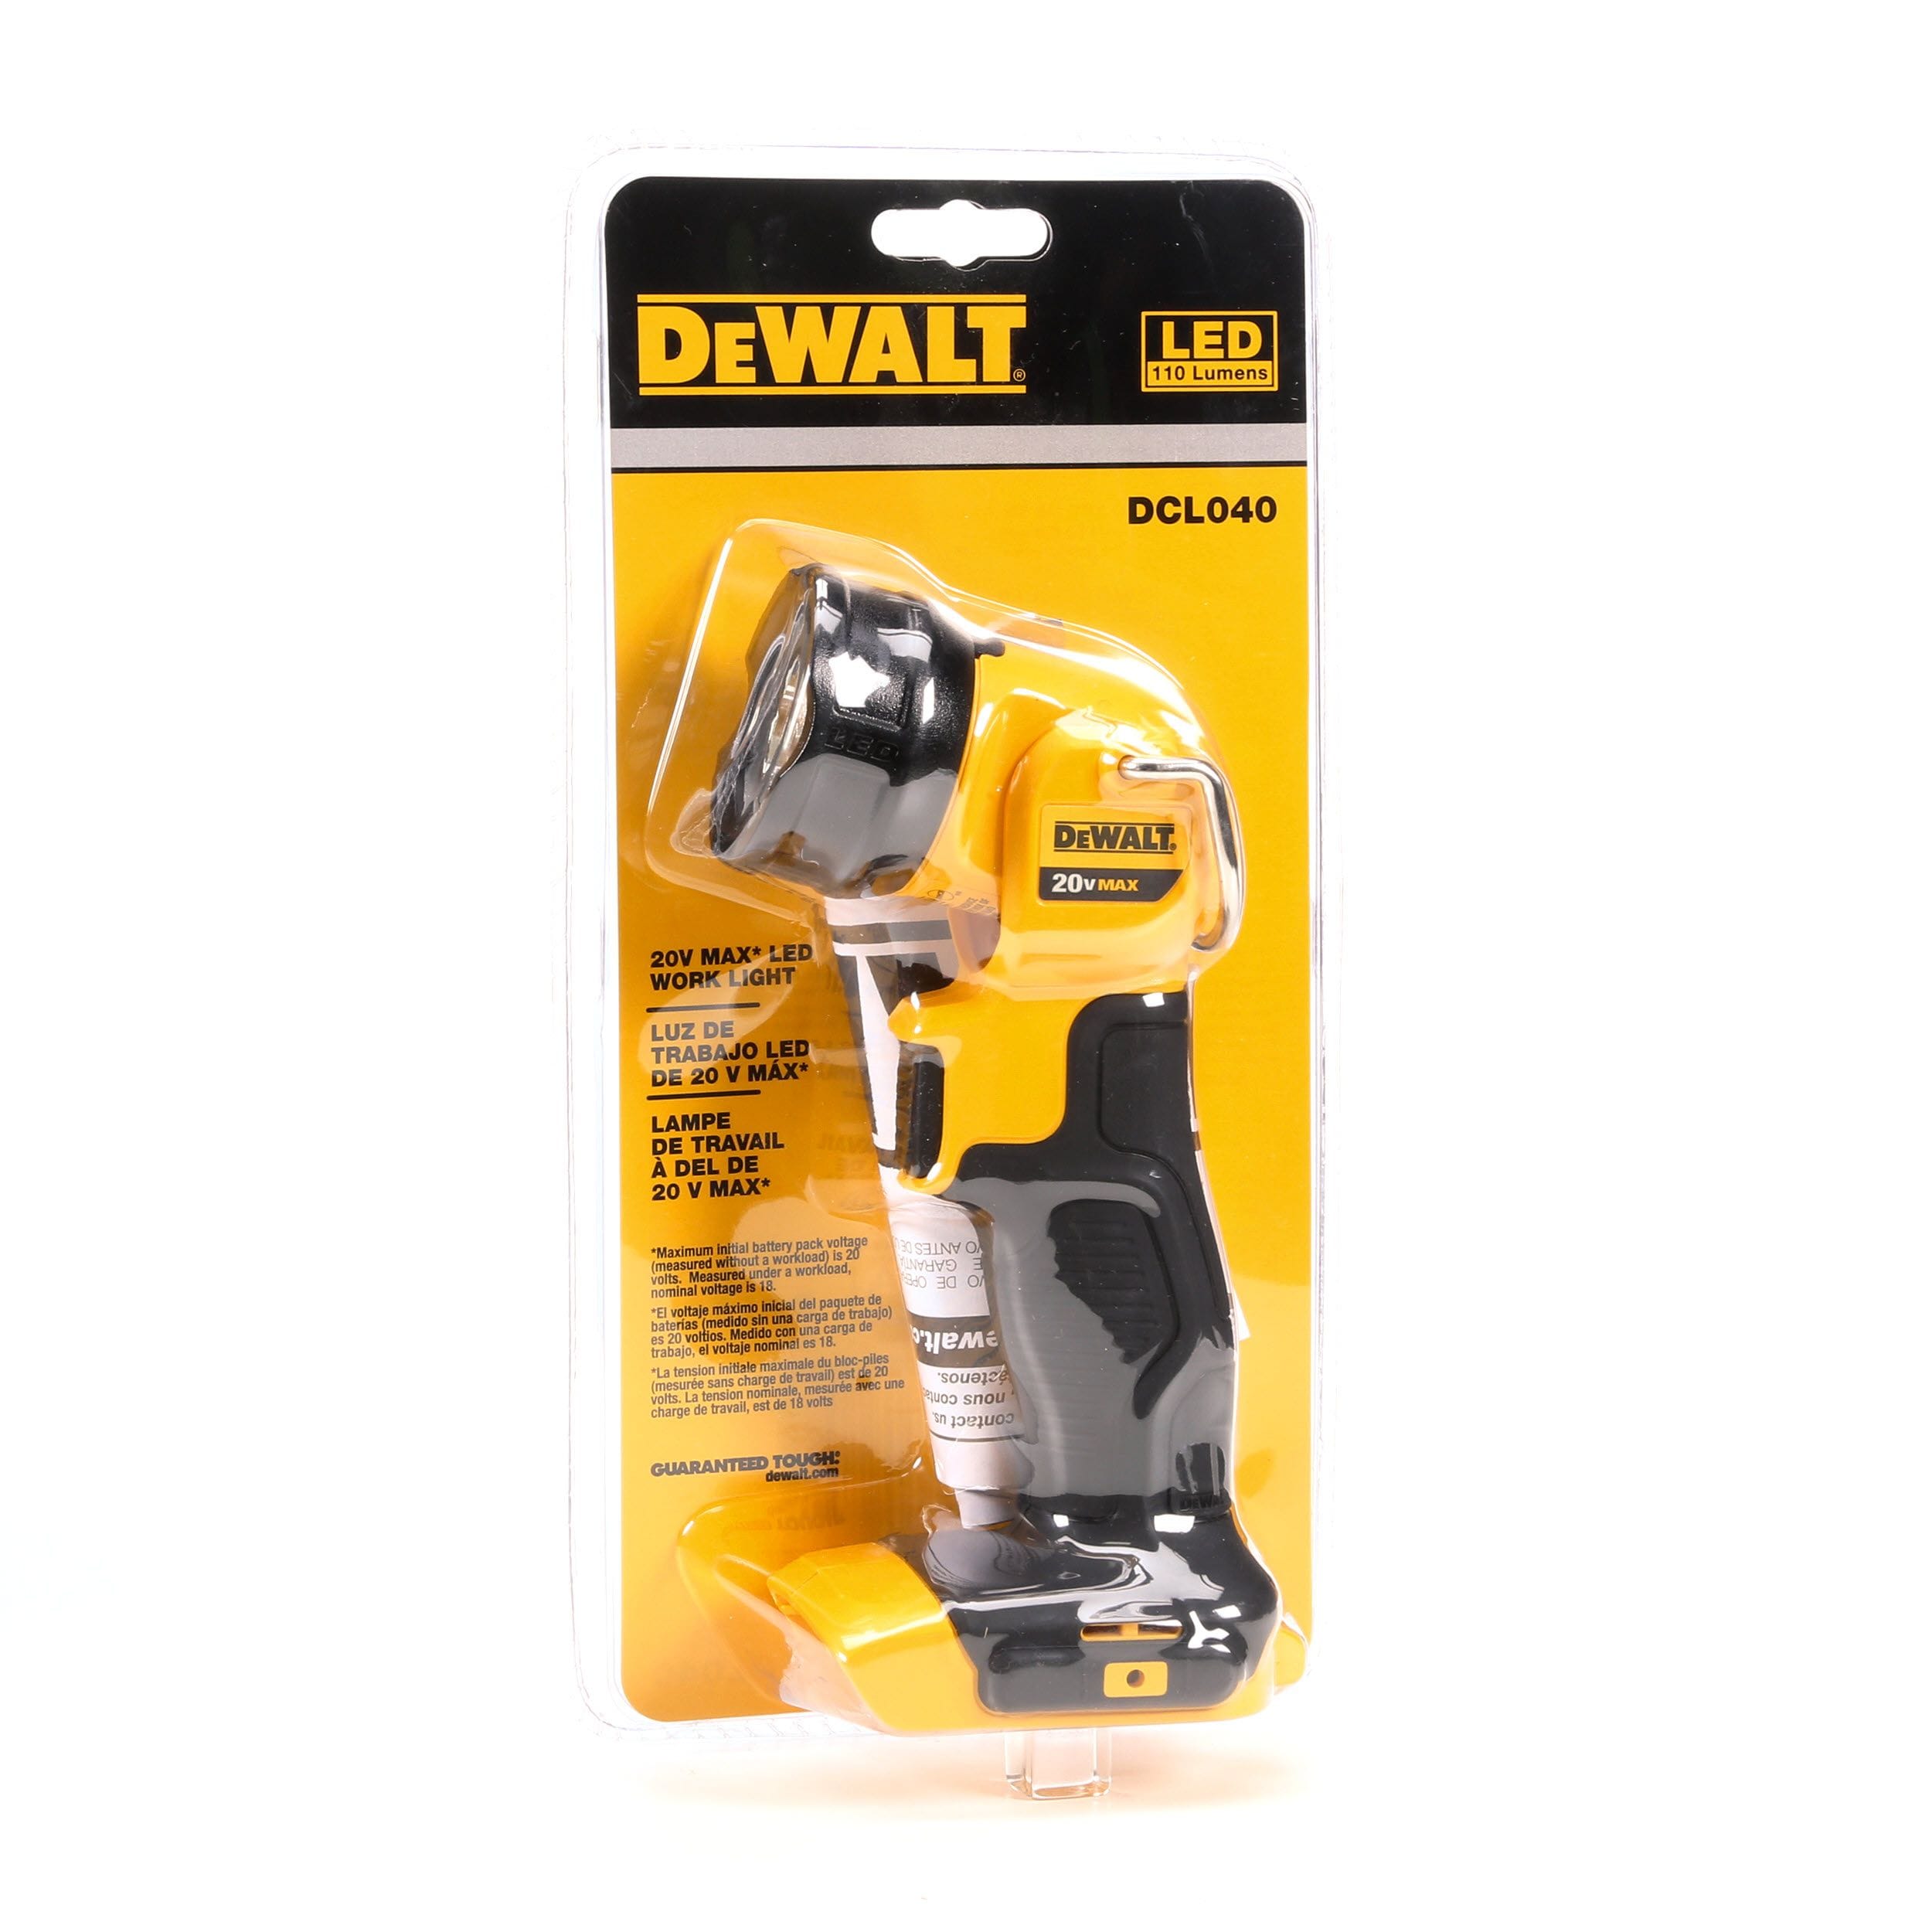 DEWALT LED Flashlight DCL043 N 18v XR Work Light bare tool Body Only 